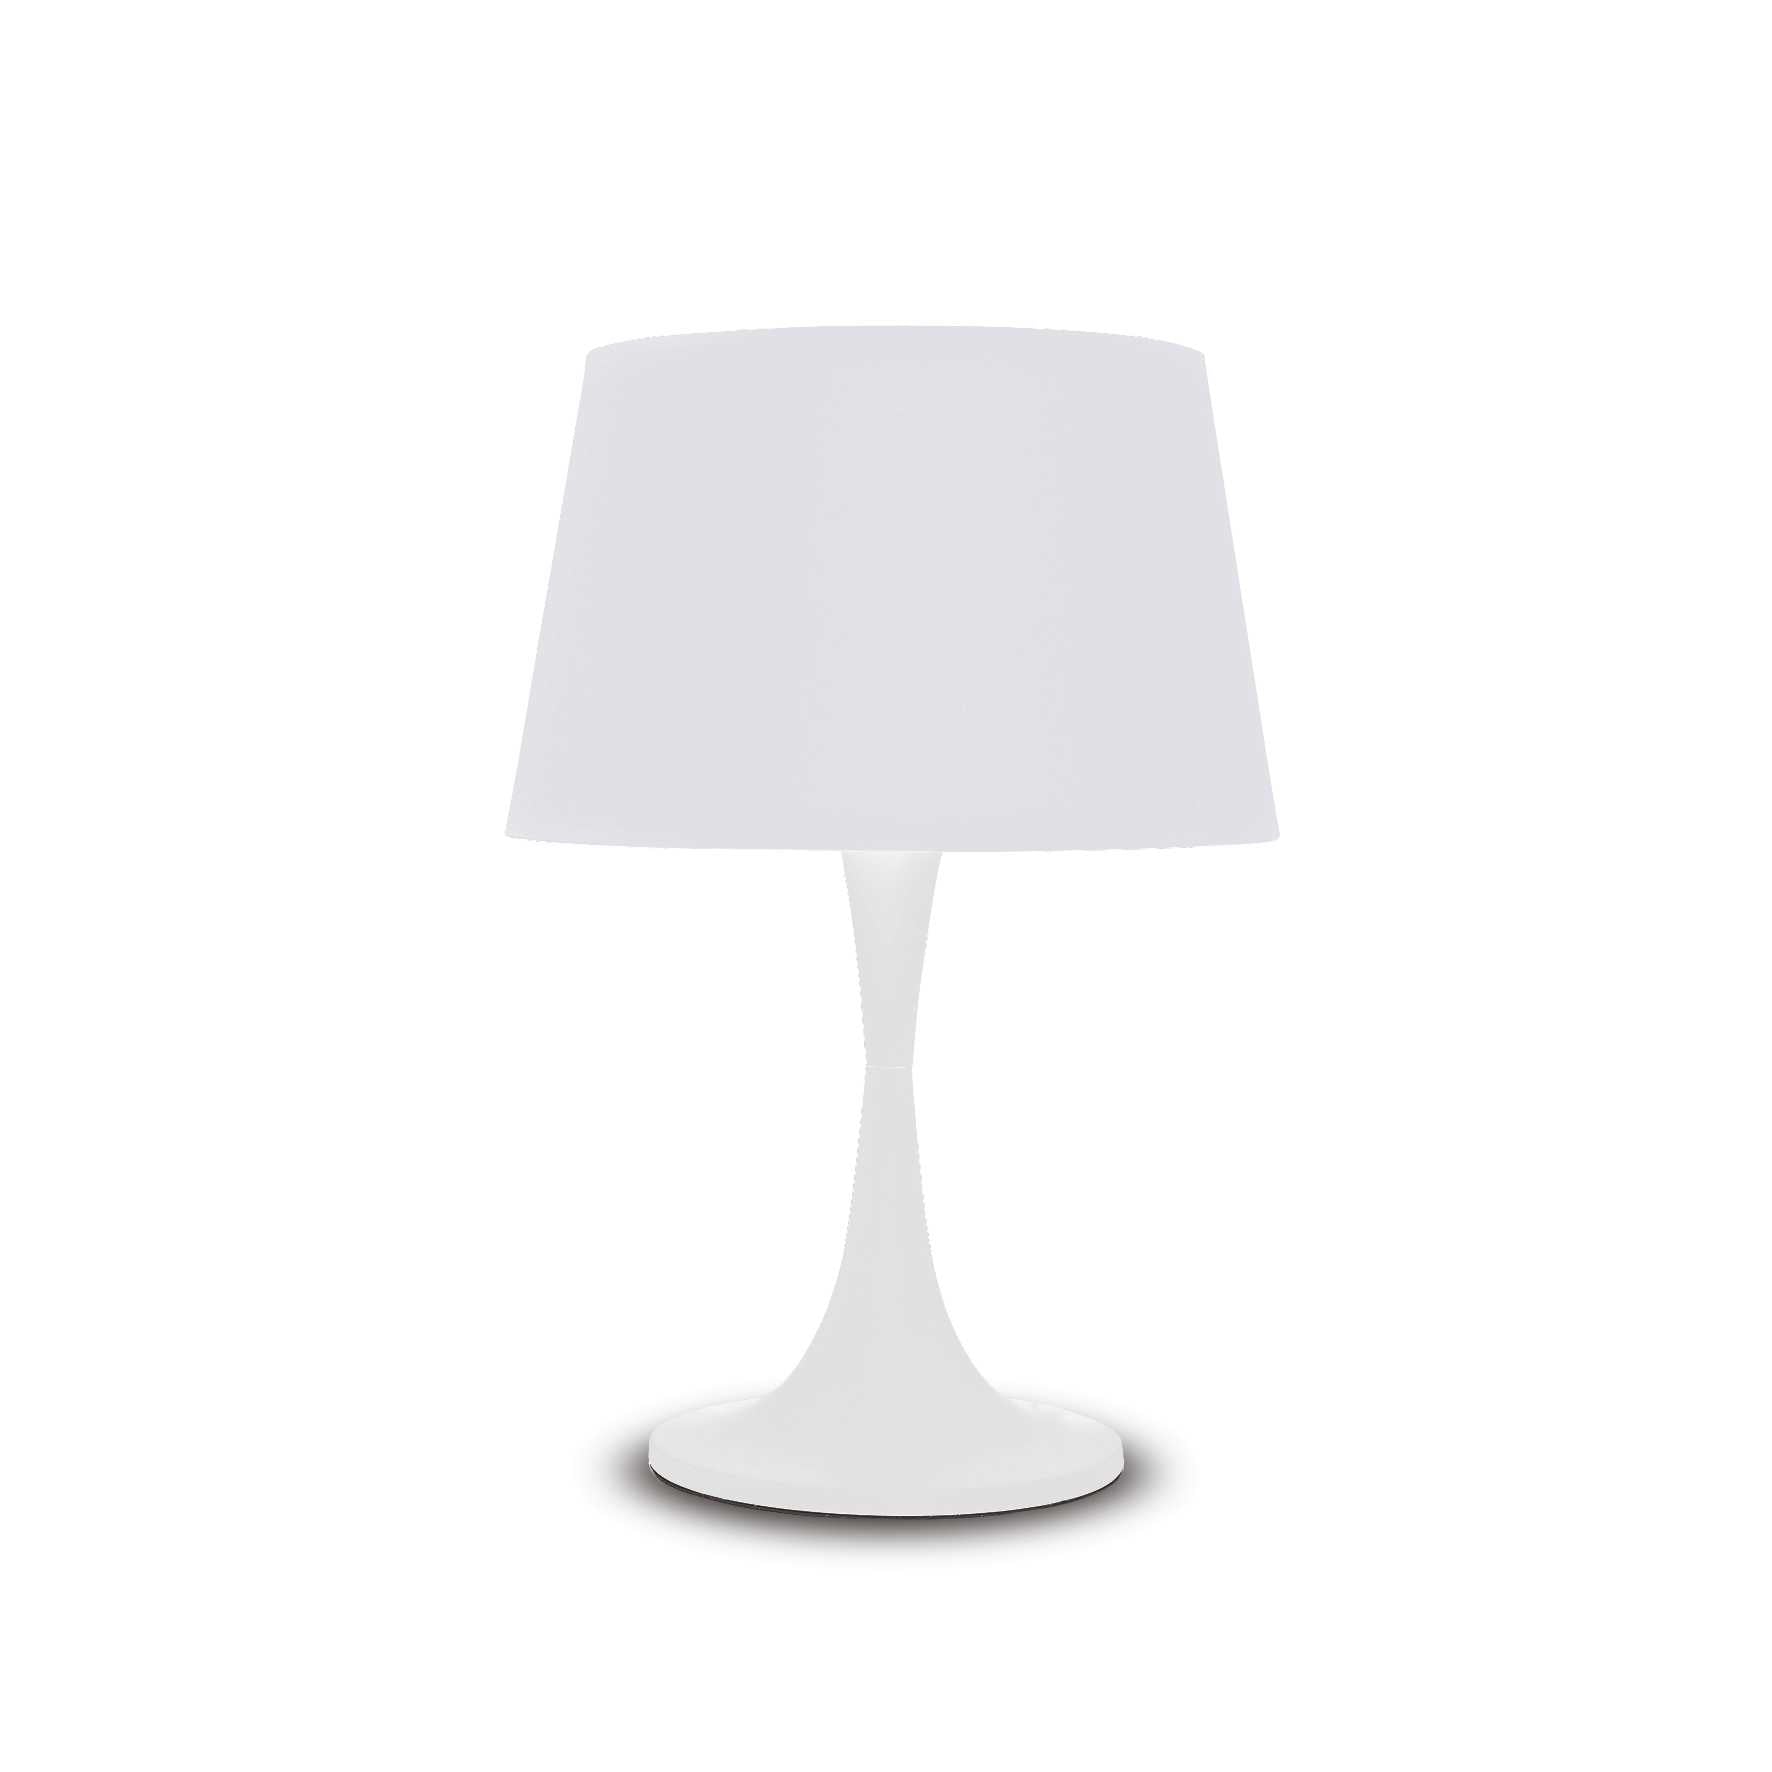 London Table Lamp - Black/White Finish - Cusack Lighting